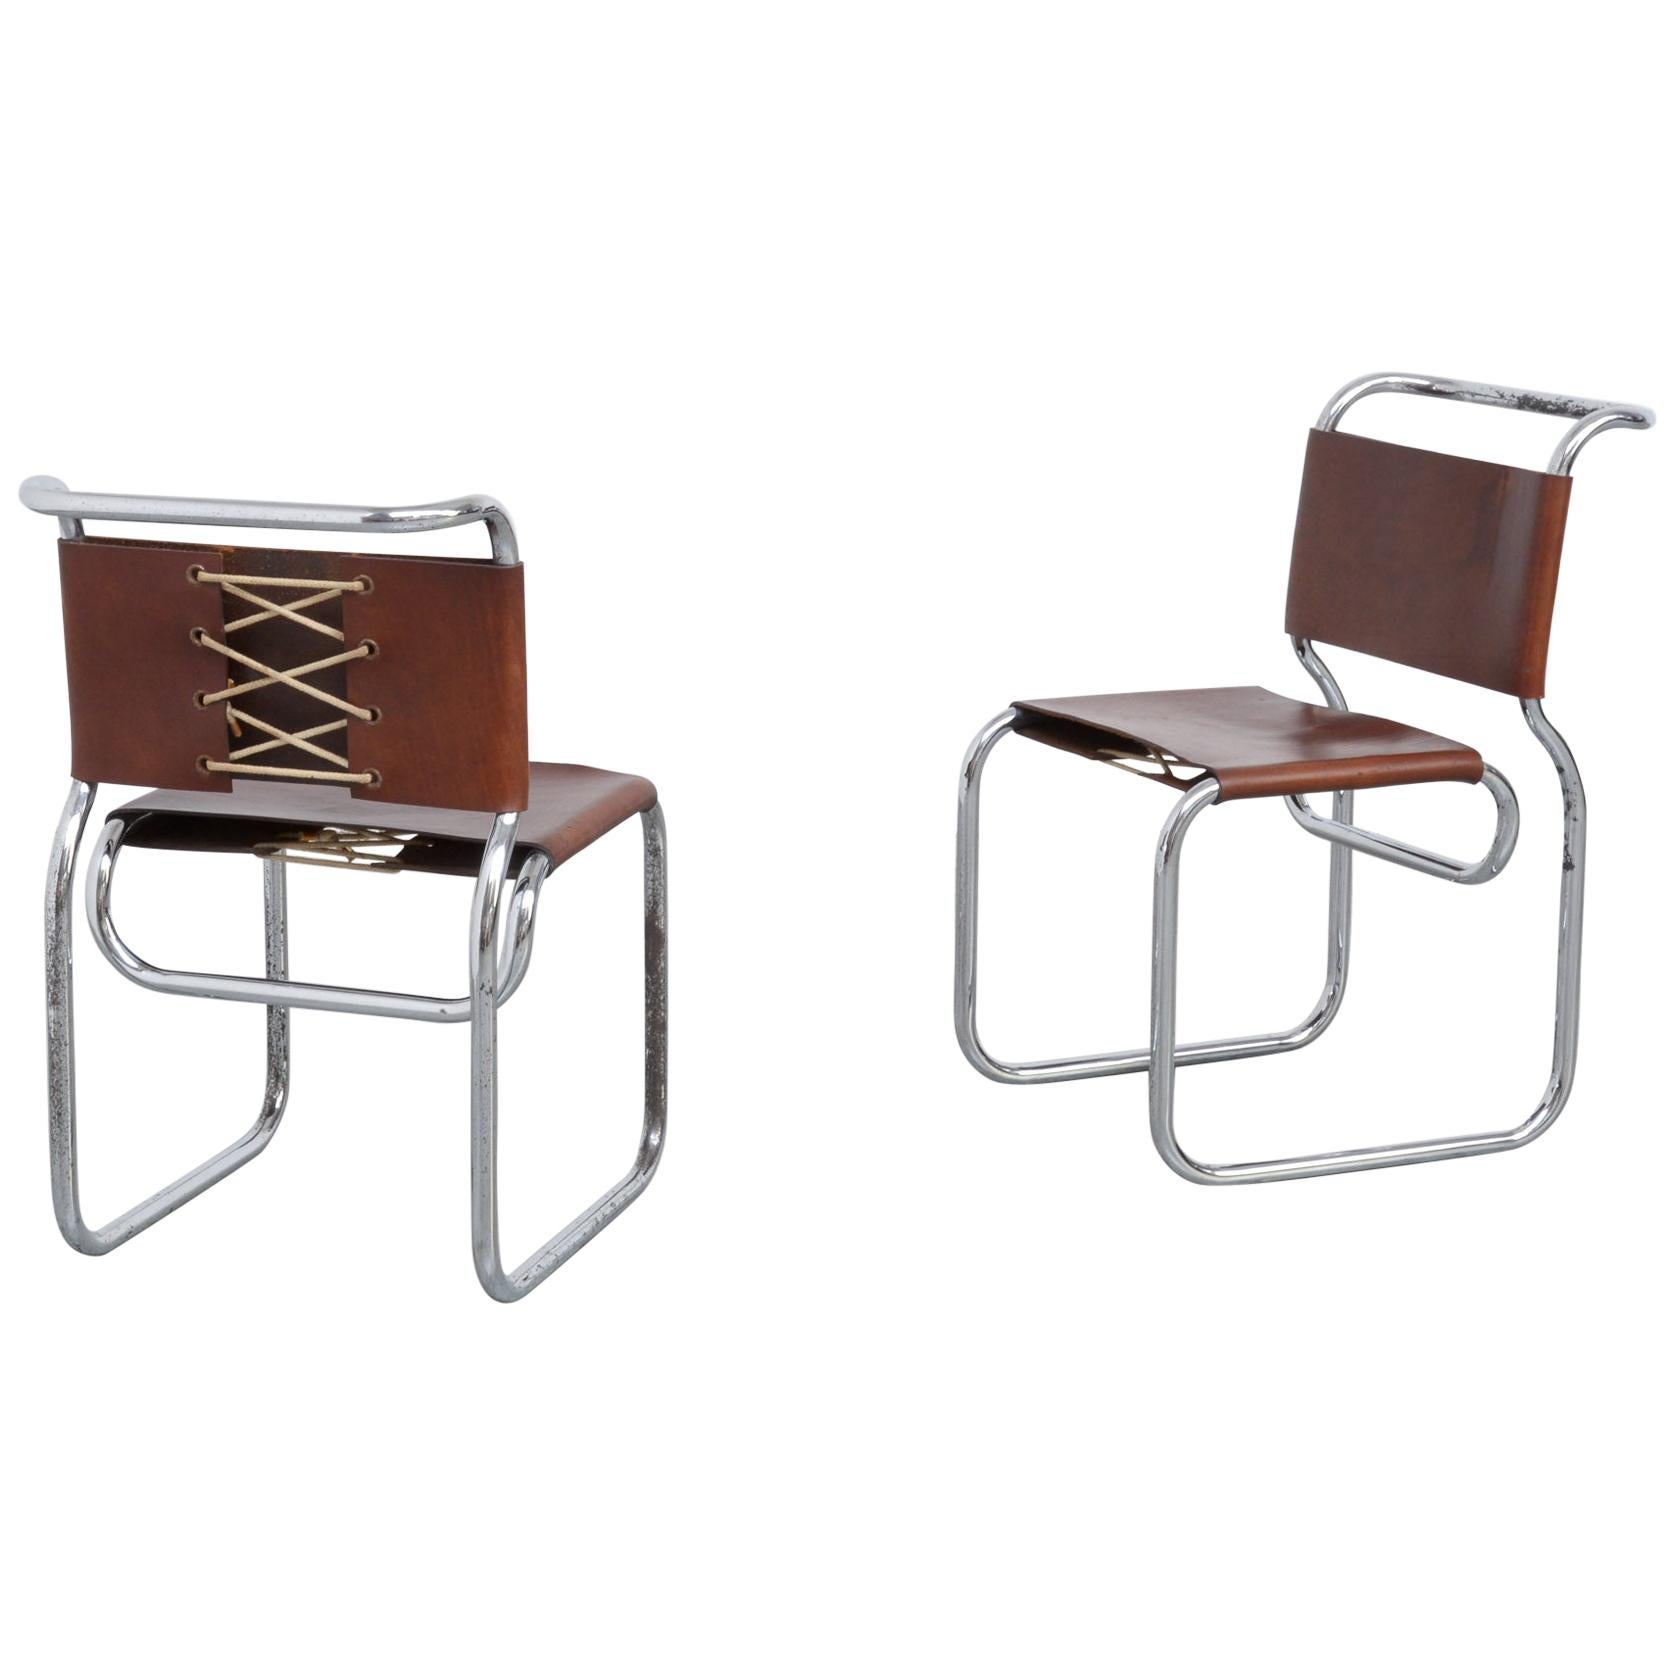 Pair of Bauhaus Inspired Tubular Chairs